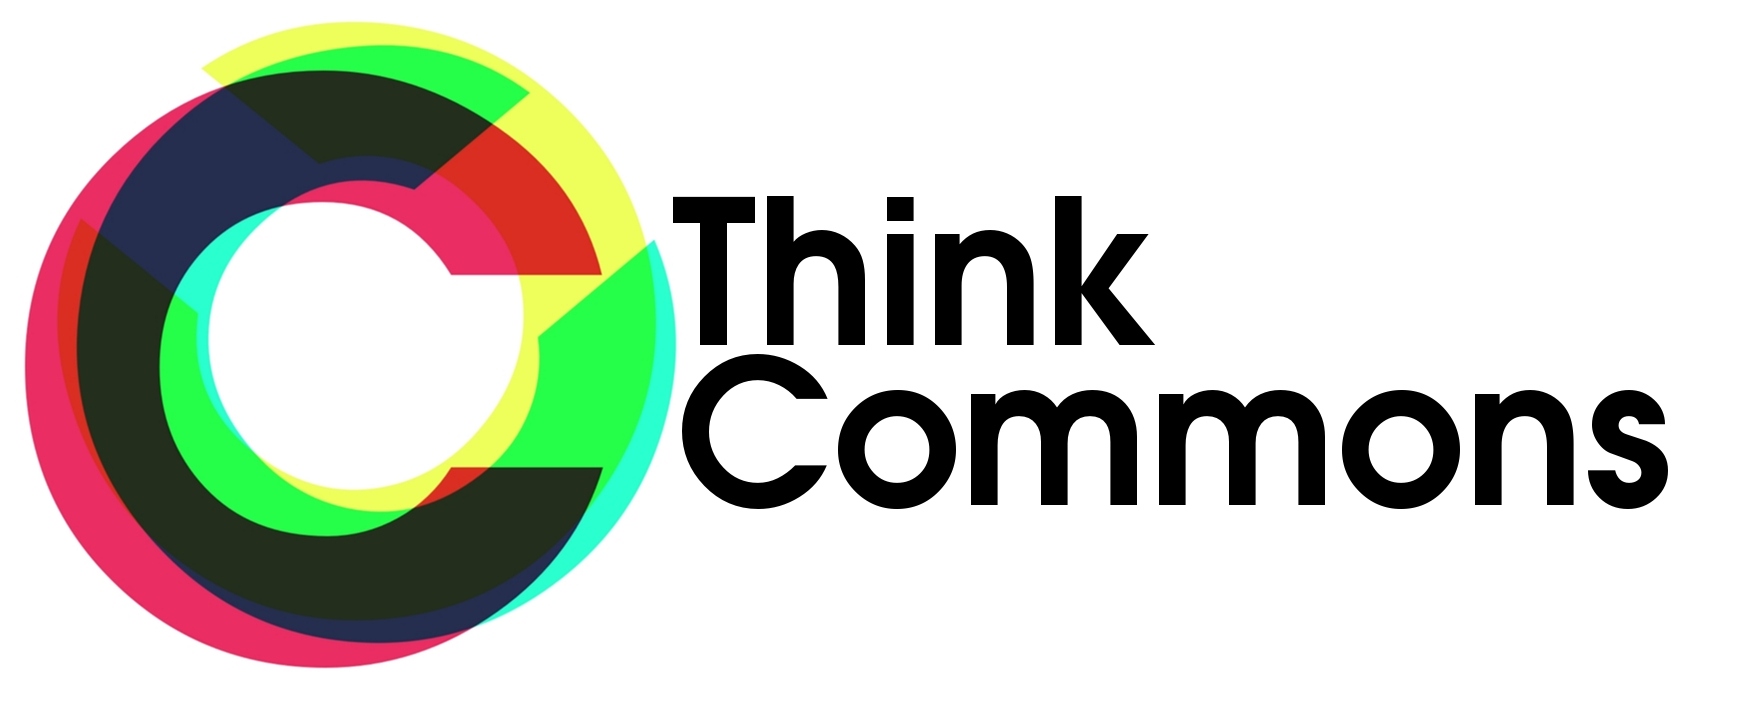 Think Commons | Network Learning. Ciudadanía en Red